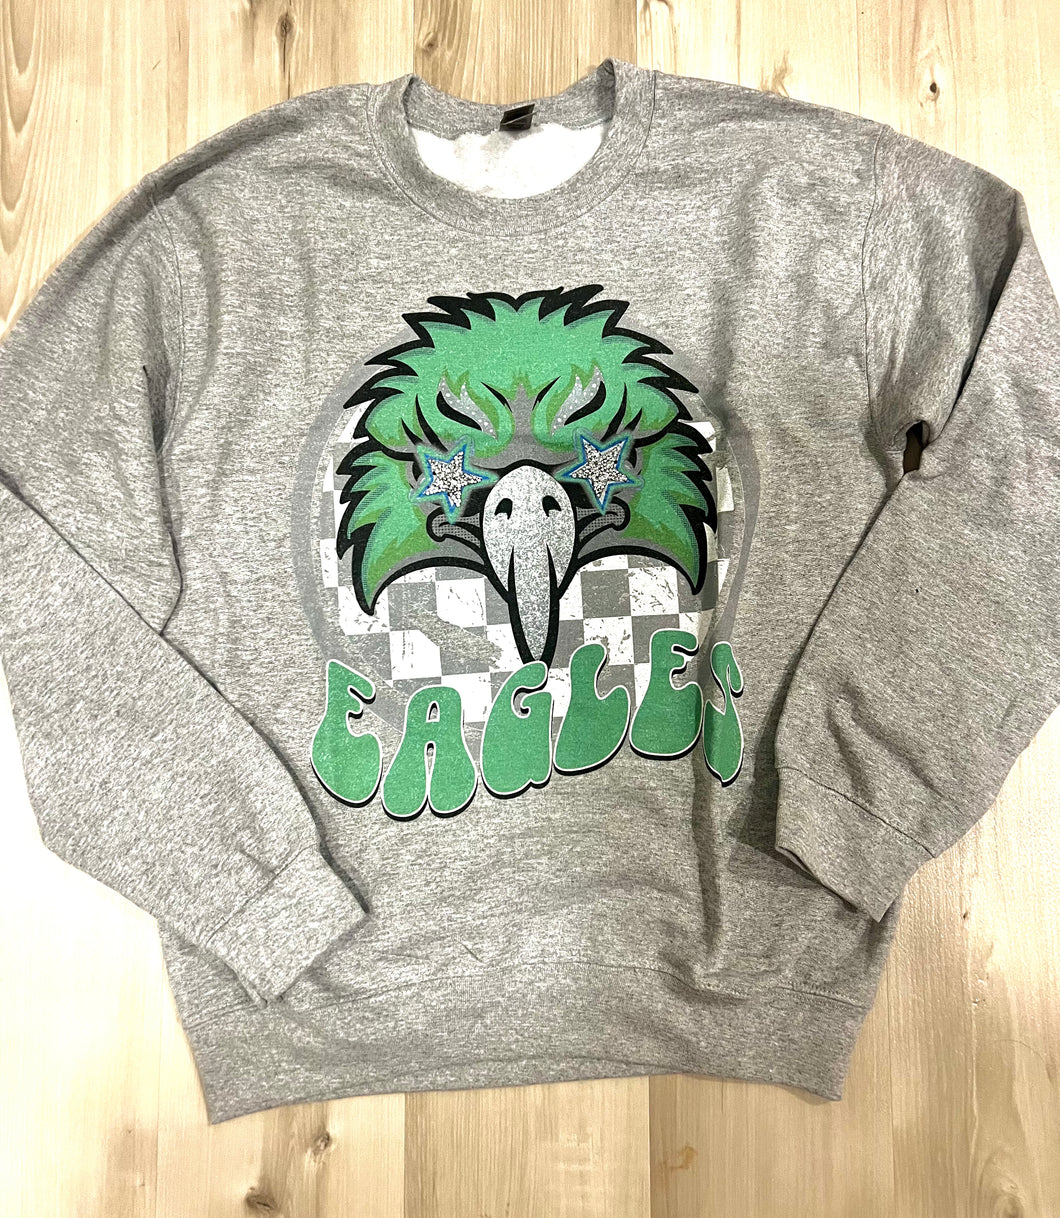 (S, M & 2X) Retro Eagles Sweatshirt